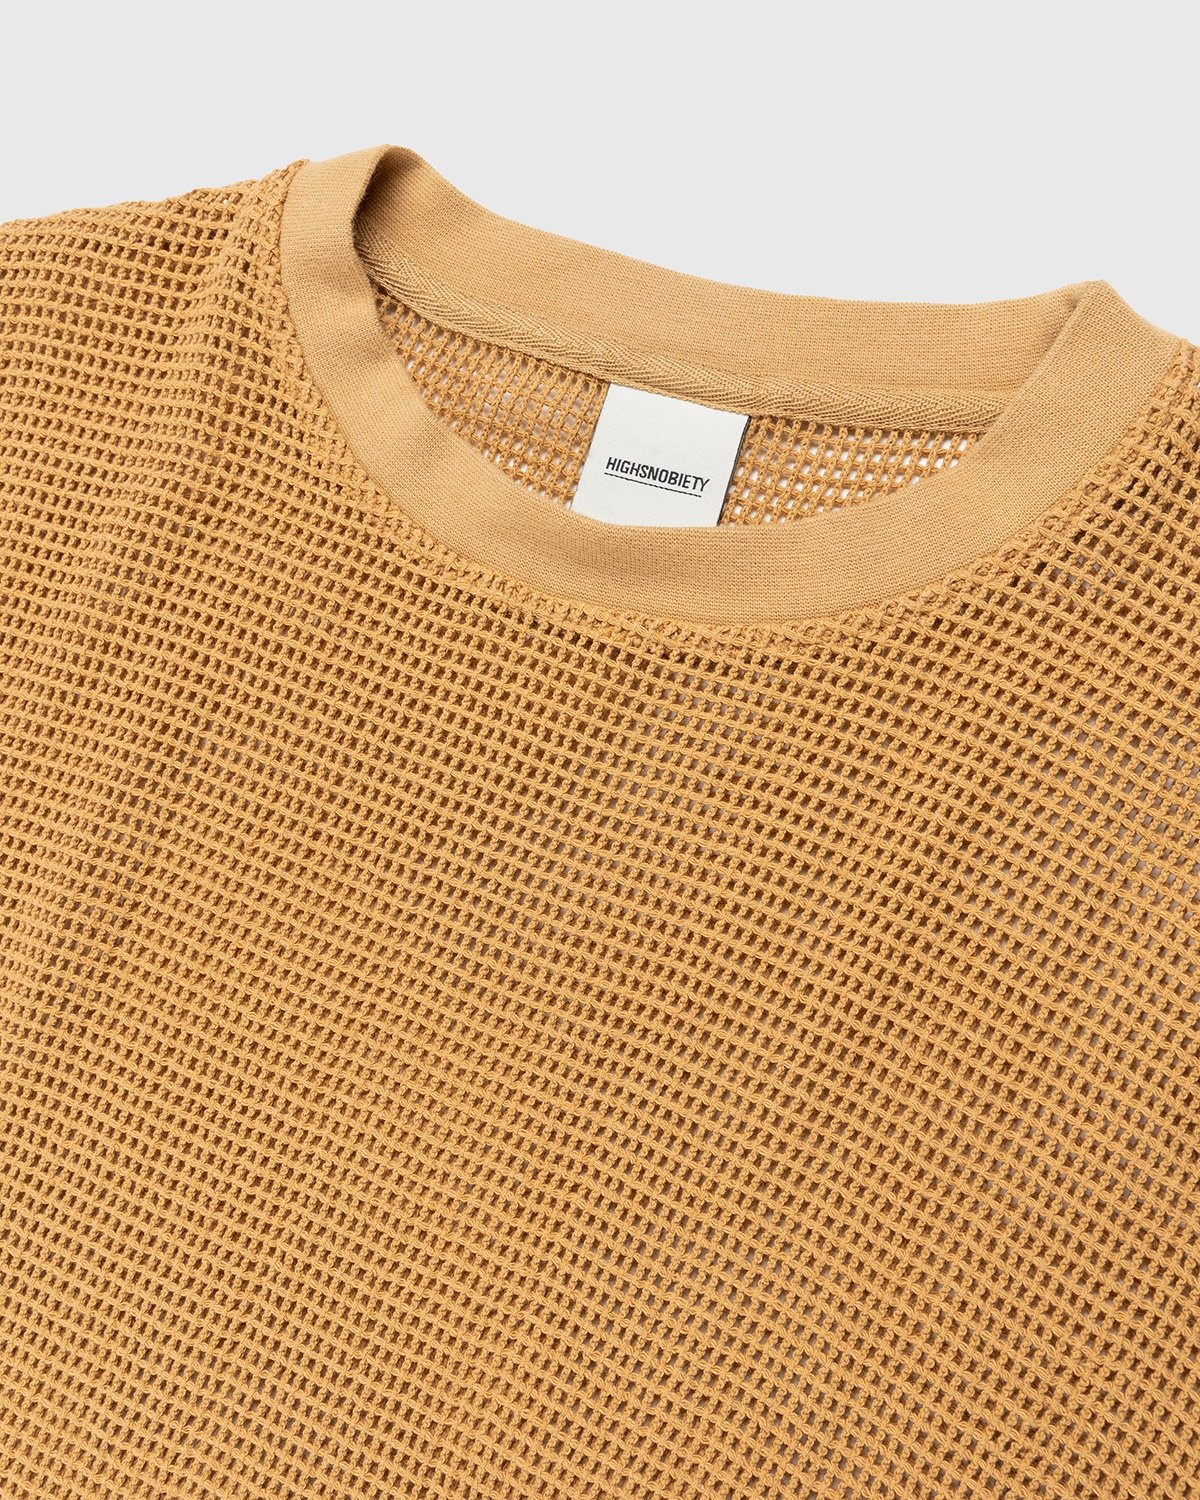 Highsnobiety – Knit Mesh Jersey T-Shirt Brown - T-Shirts - Brown - Image 3